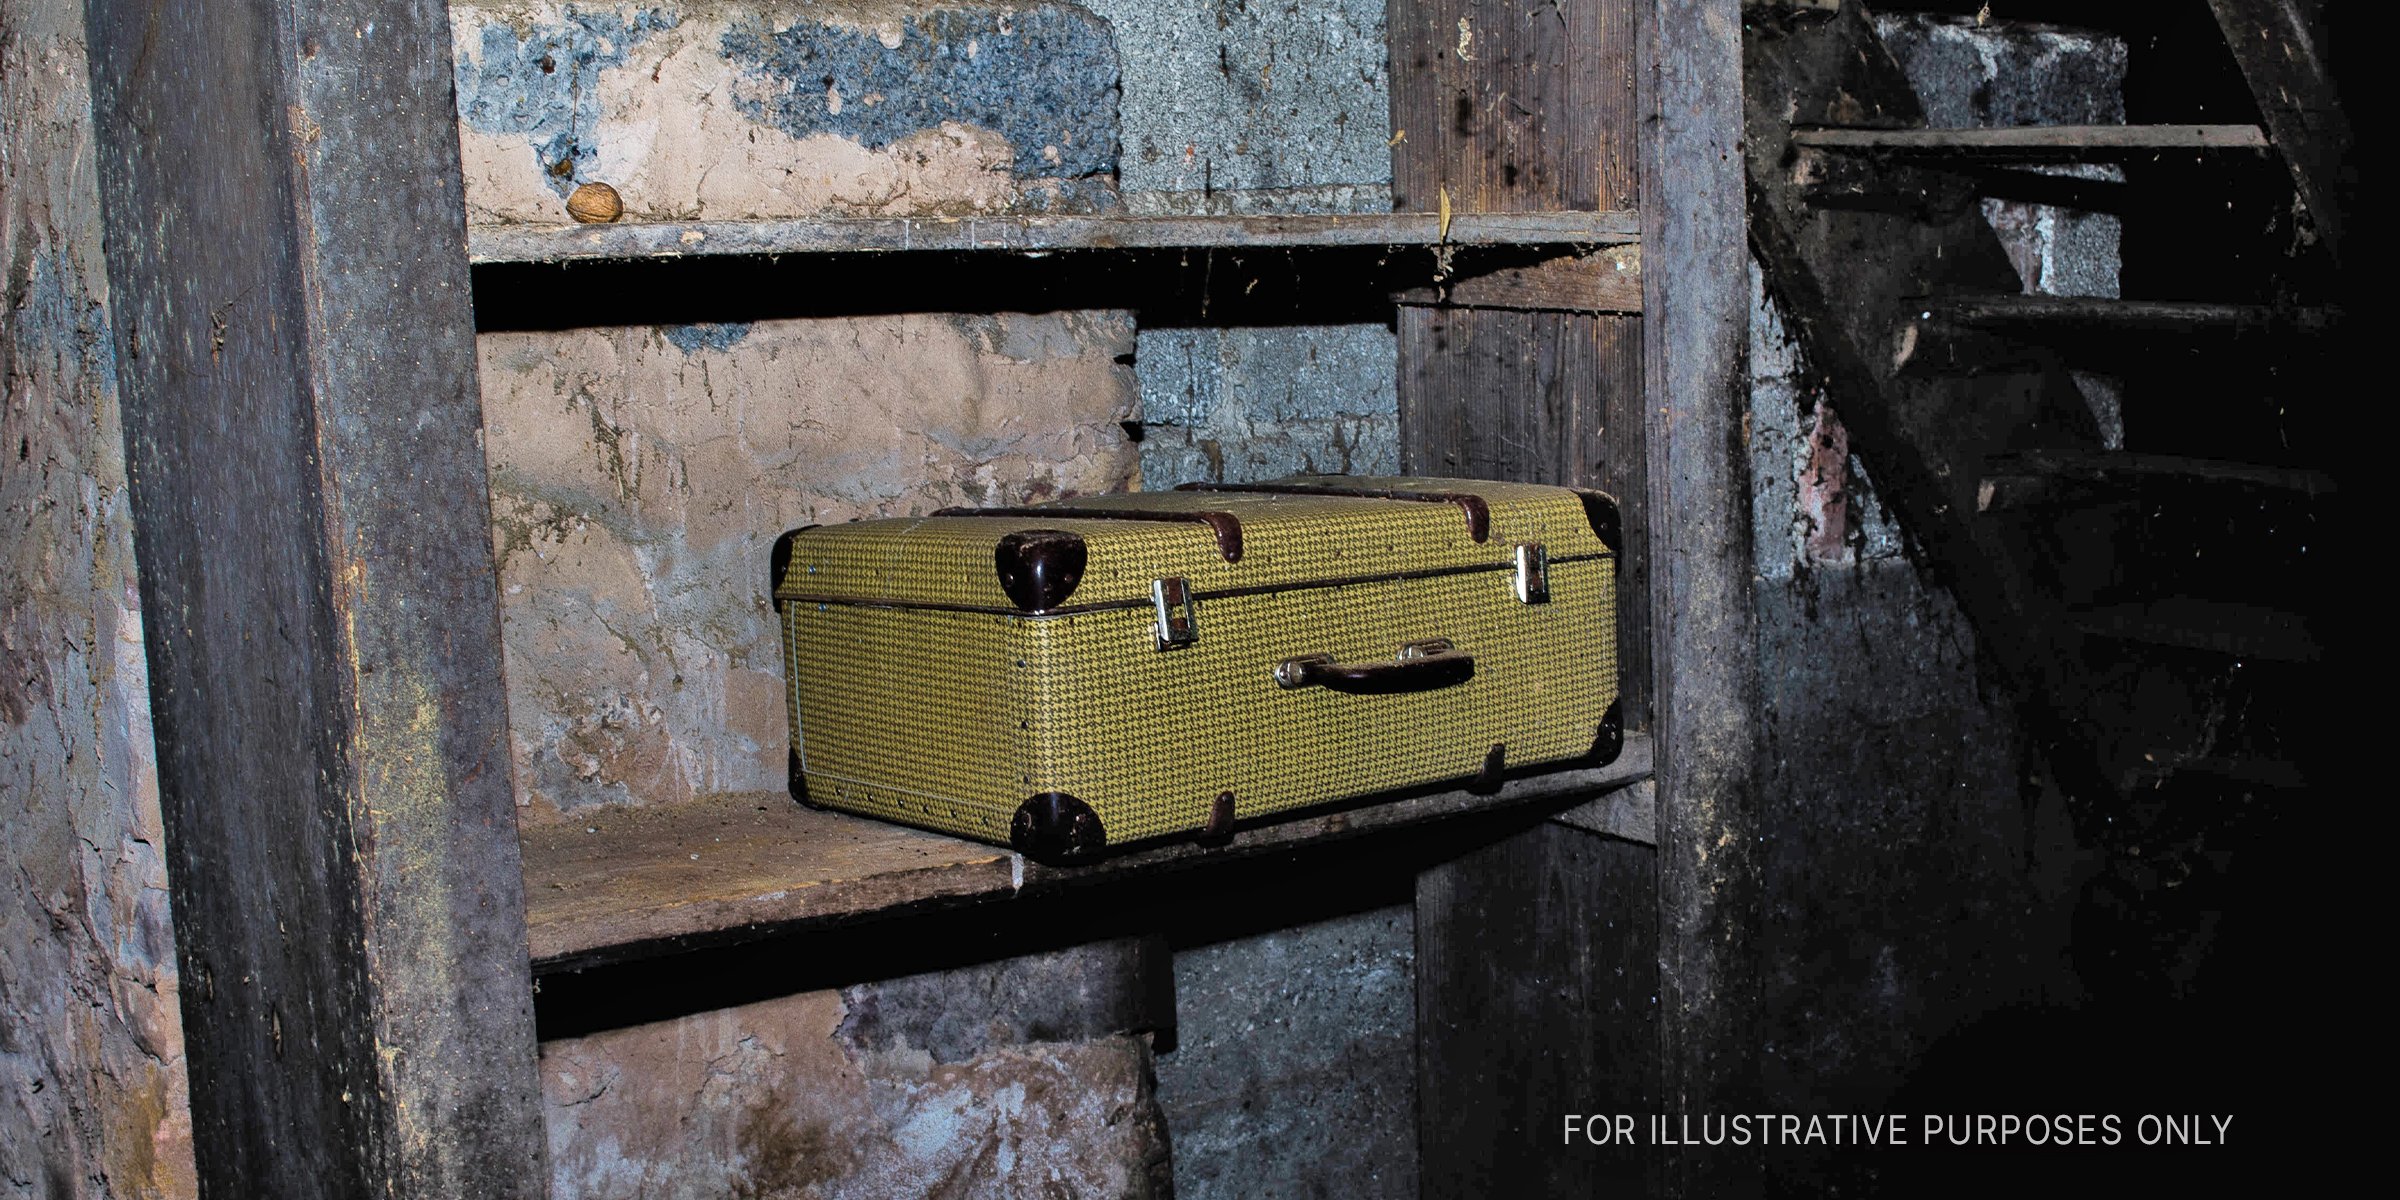 Suitcase in basement | Source: Shutterstock